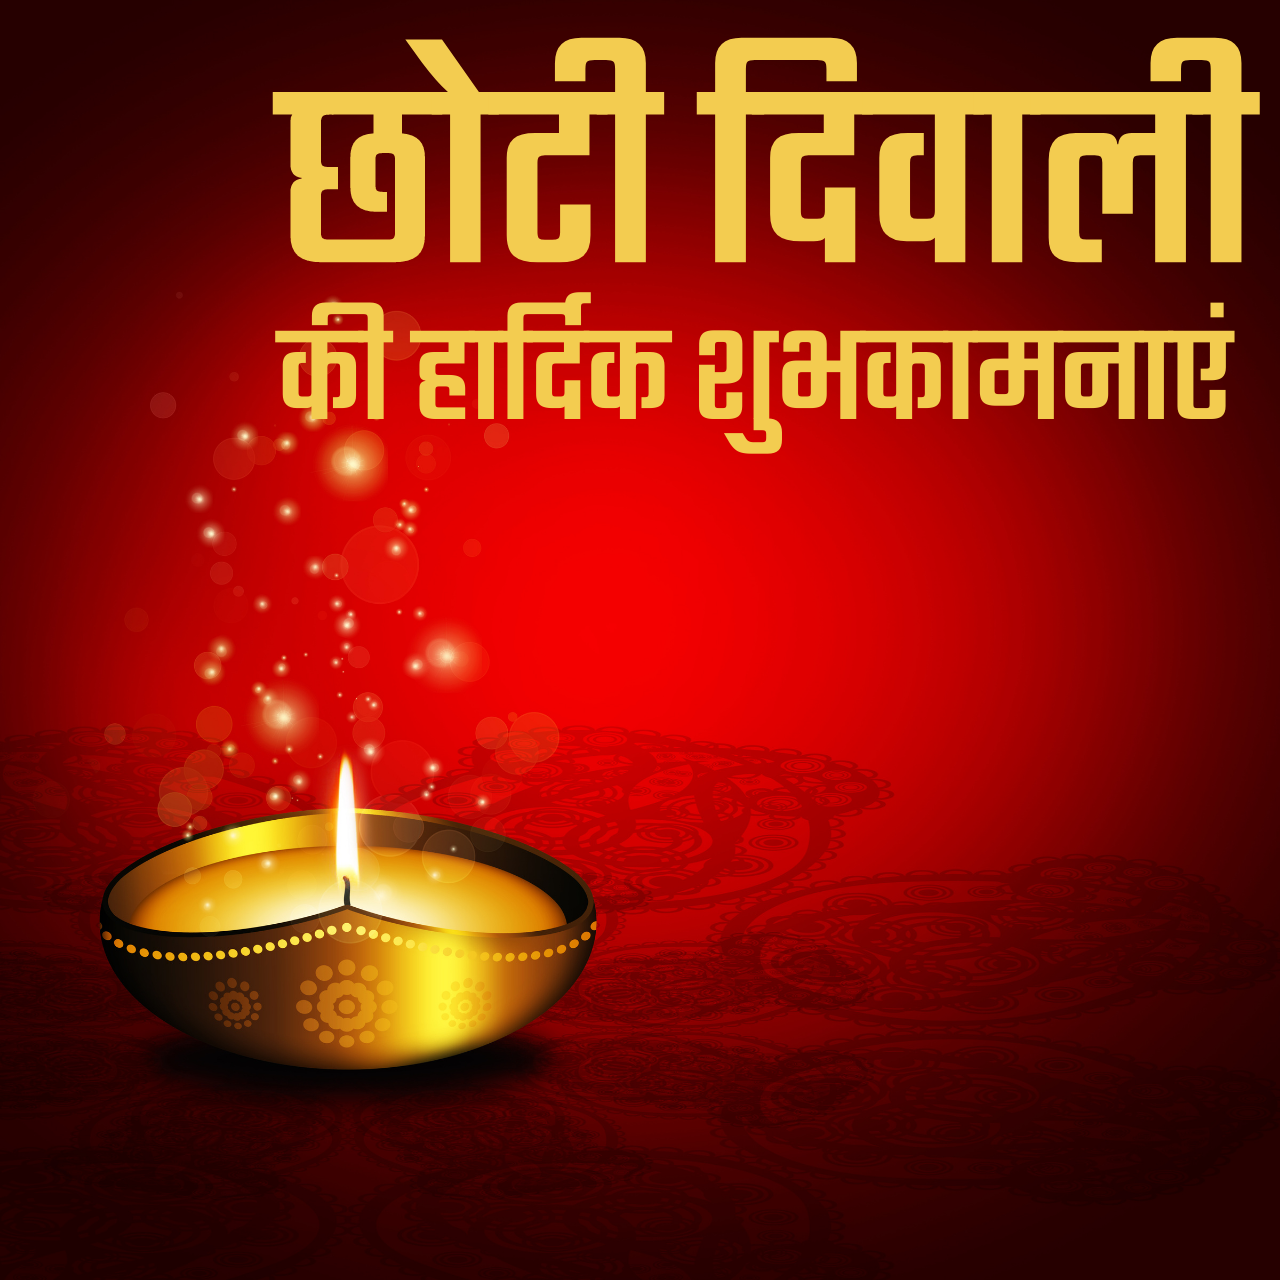 Happy Choti Diwali 2021 Hindi HD Images, Status, Wishes, Quotes, Messages, Shayari and Greetings to Share